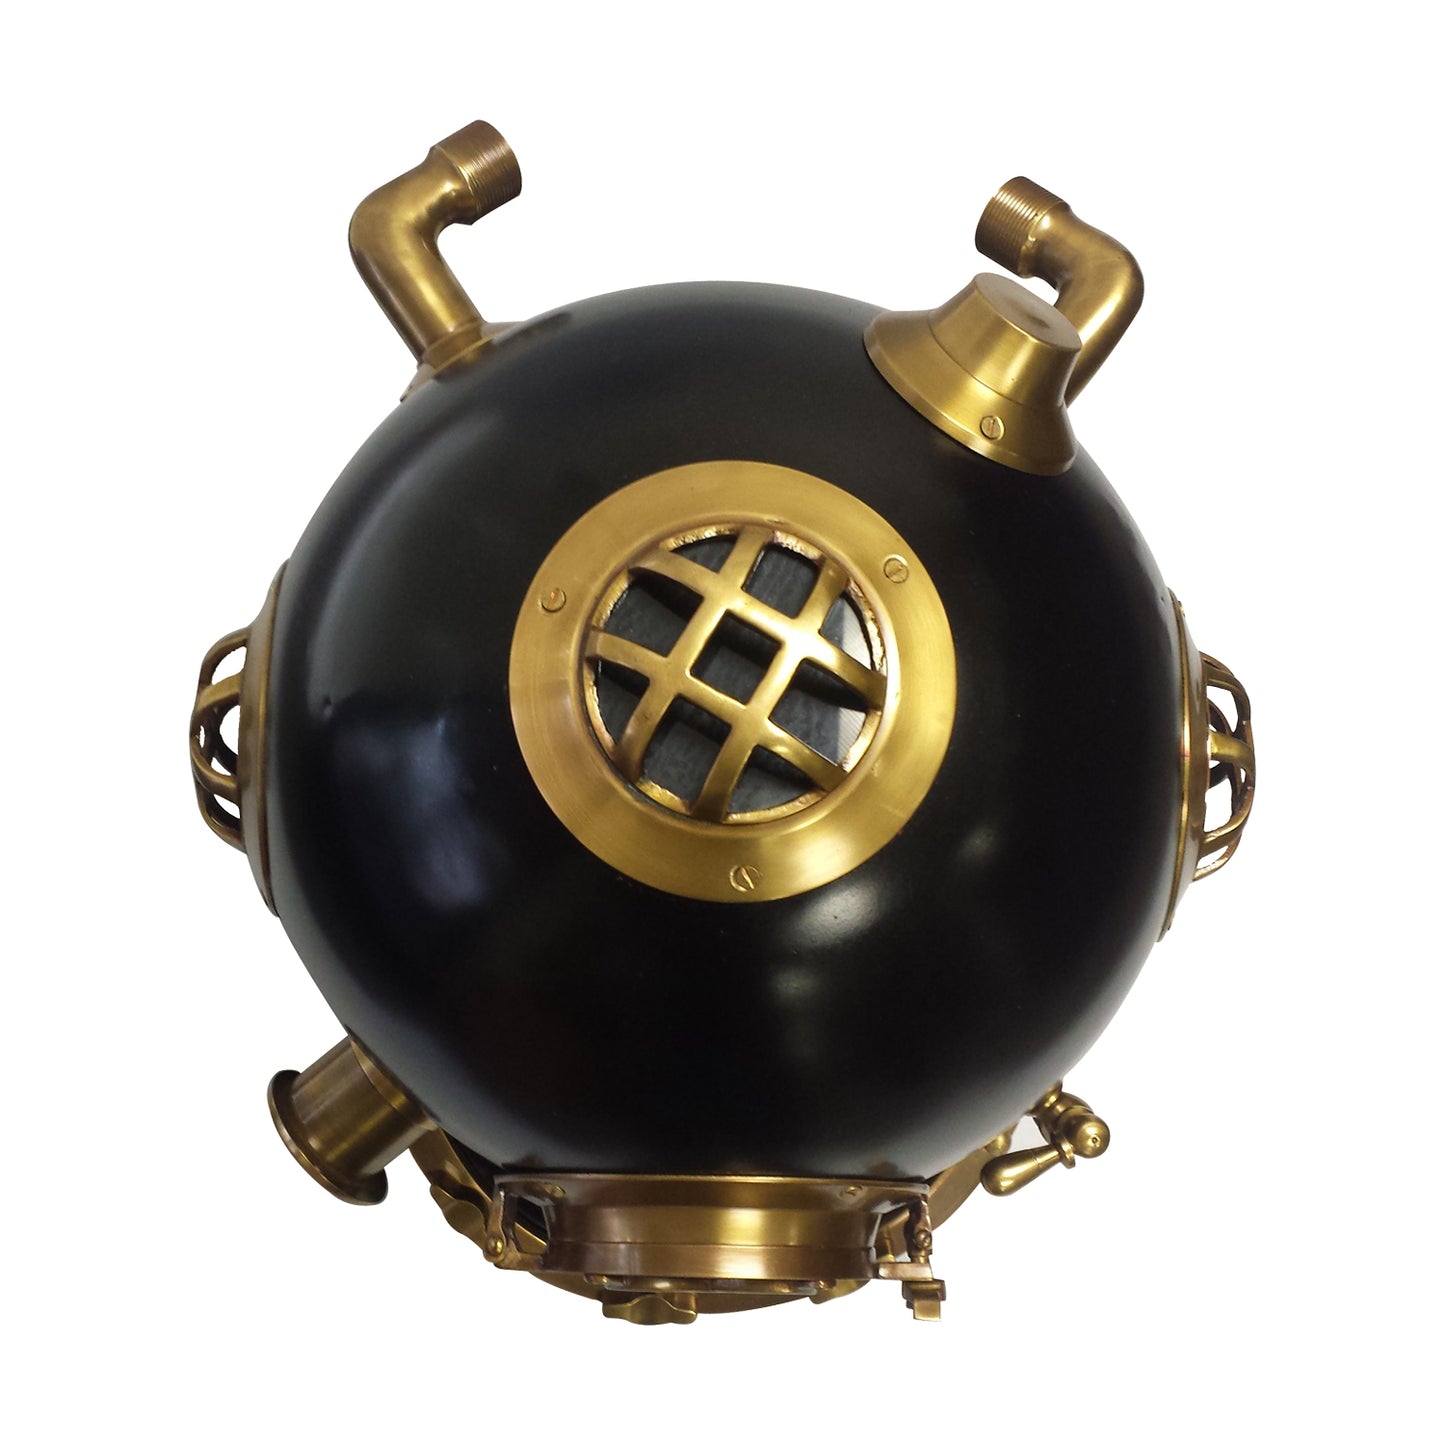 GiftBay Decorative Brass Diving Helmet, 17" Length x 13" Width